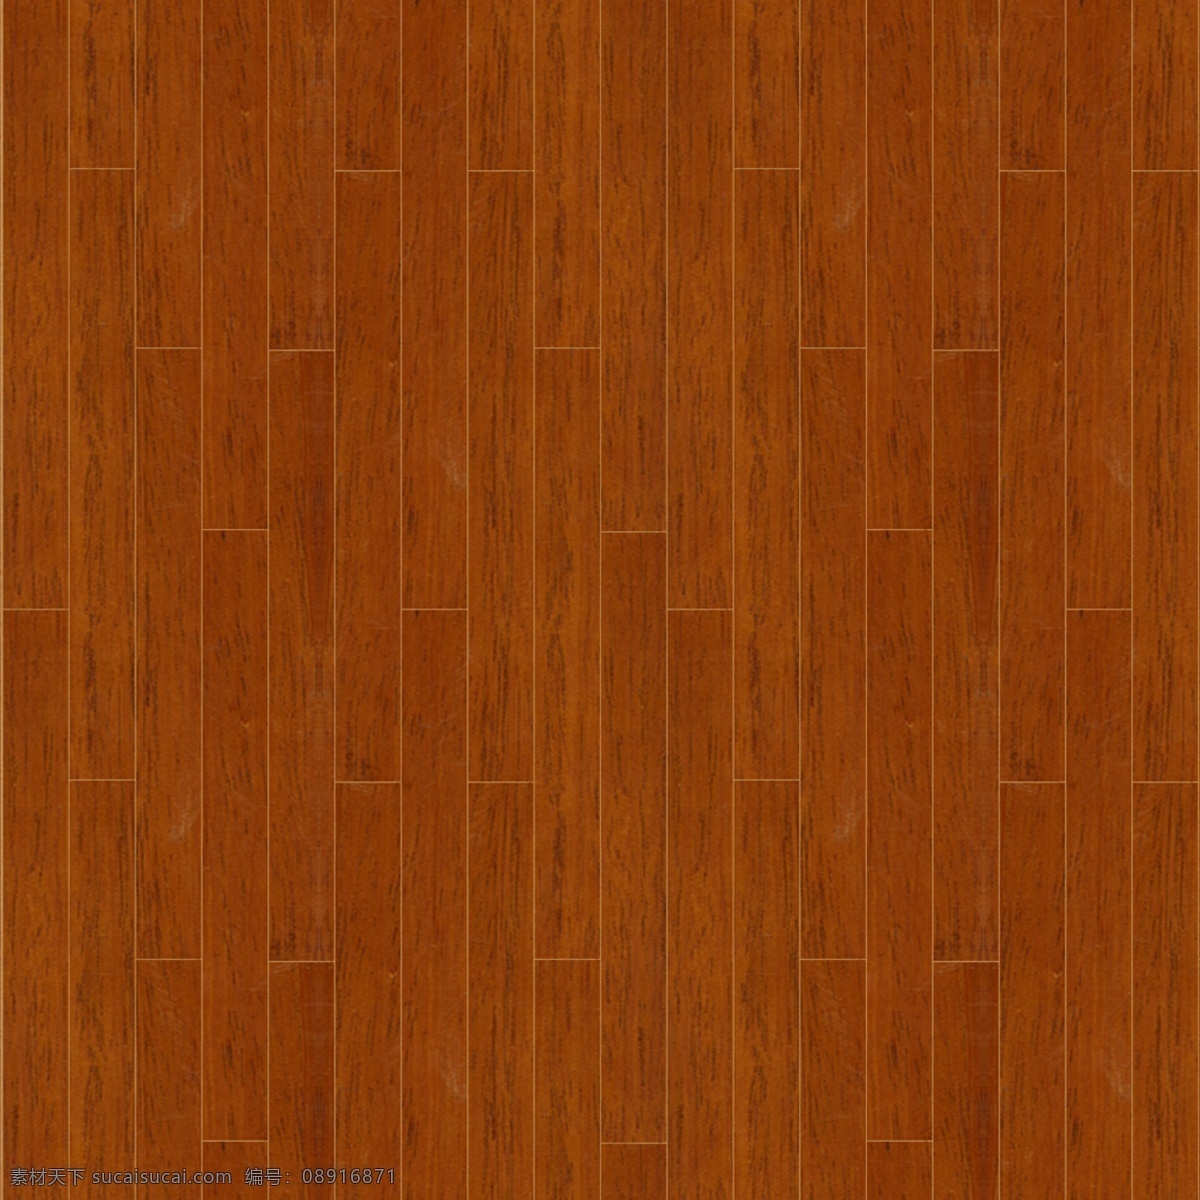 vray 红色 木地板 材质 max9 木材 有贴图 3d模型素材 材质贴图